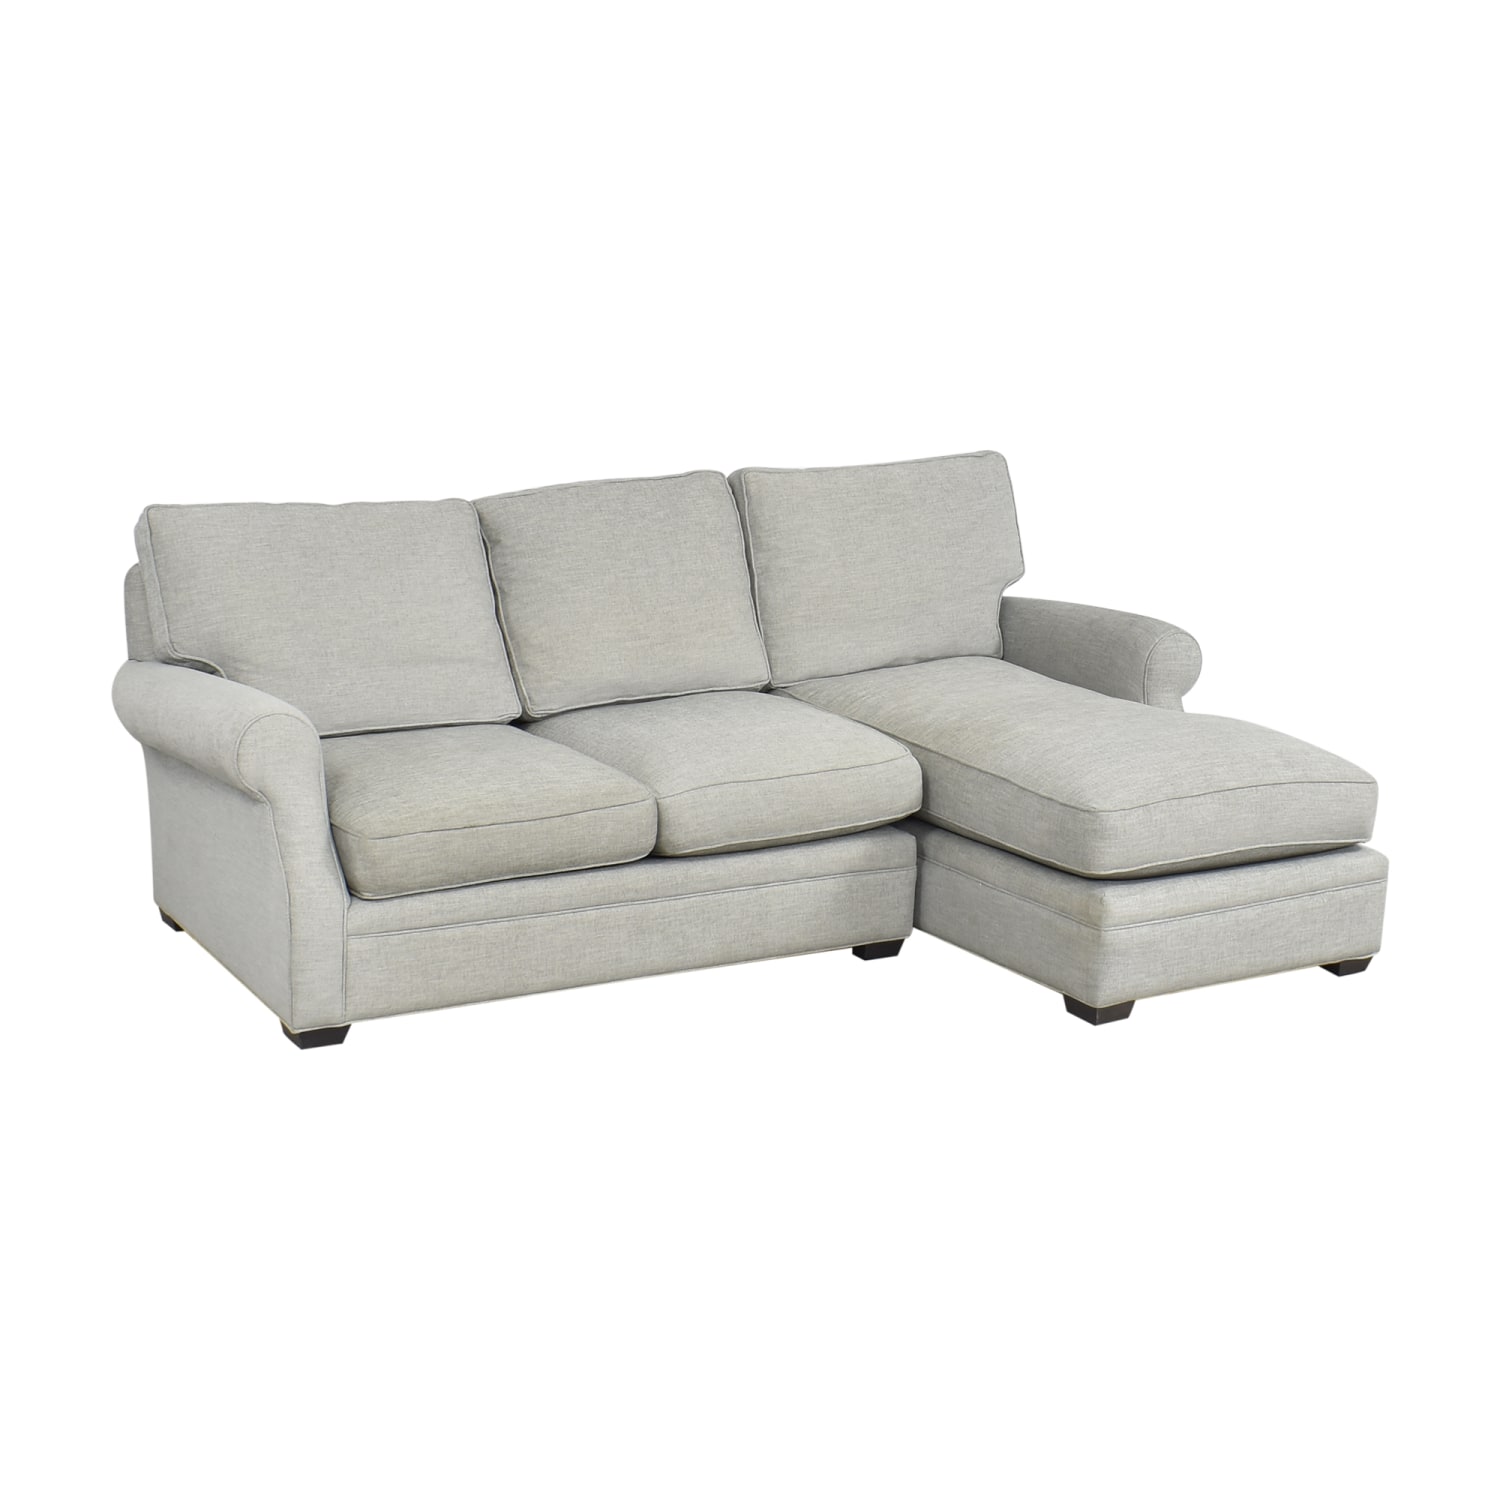 70% OFF - Arhaus Arhaus Landsbury Sectional Sofa with Chaise / Sofas